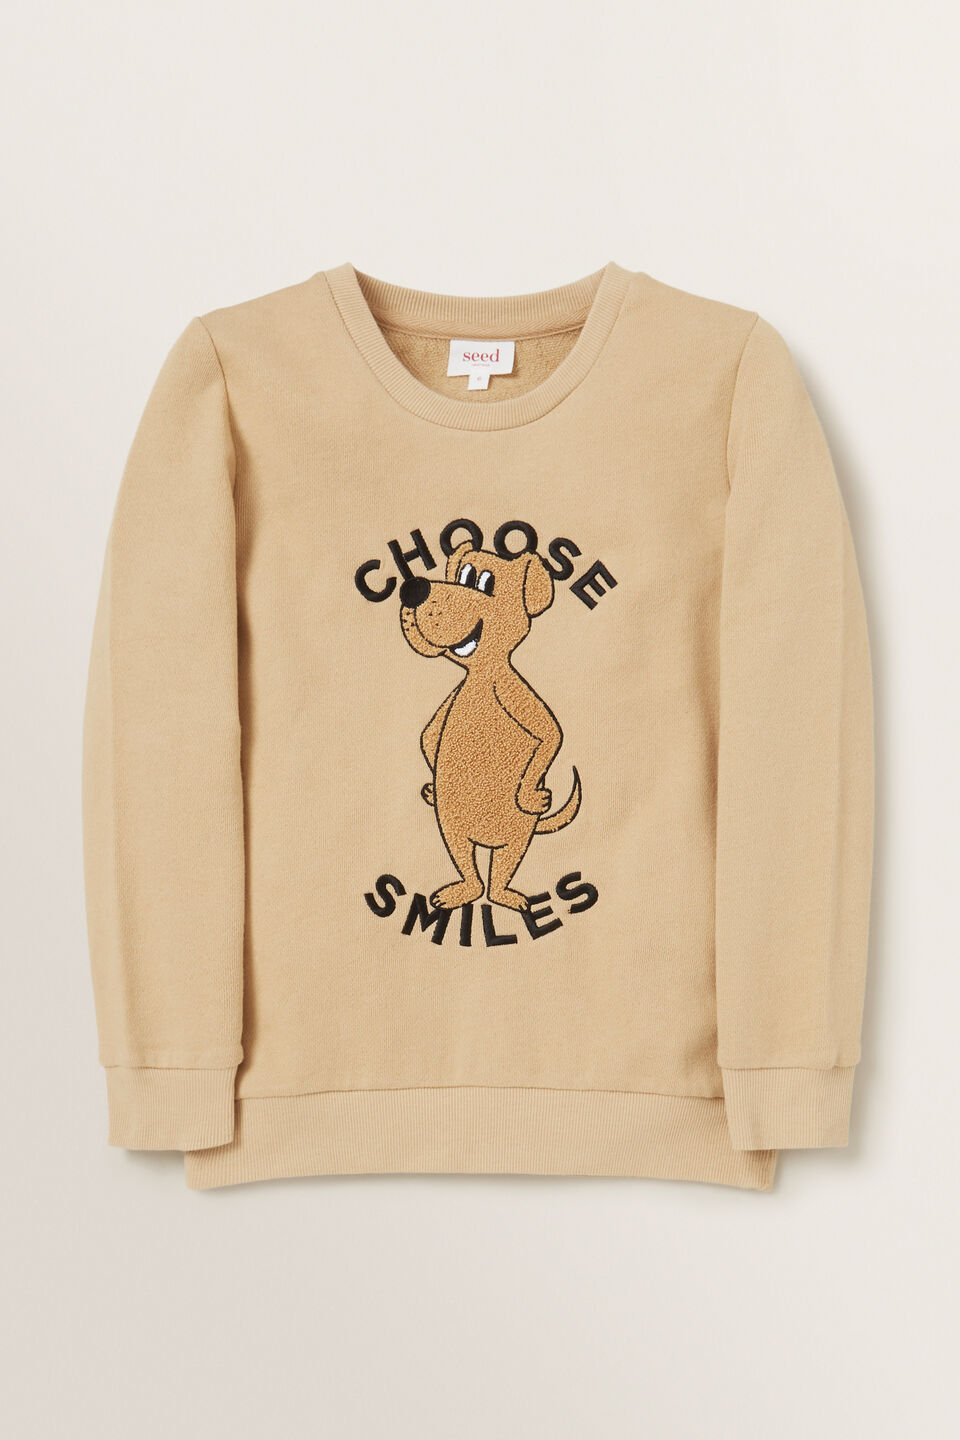 Choose Smiles Sweater  